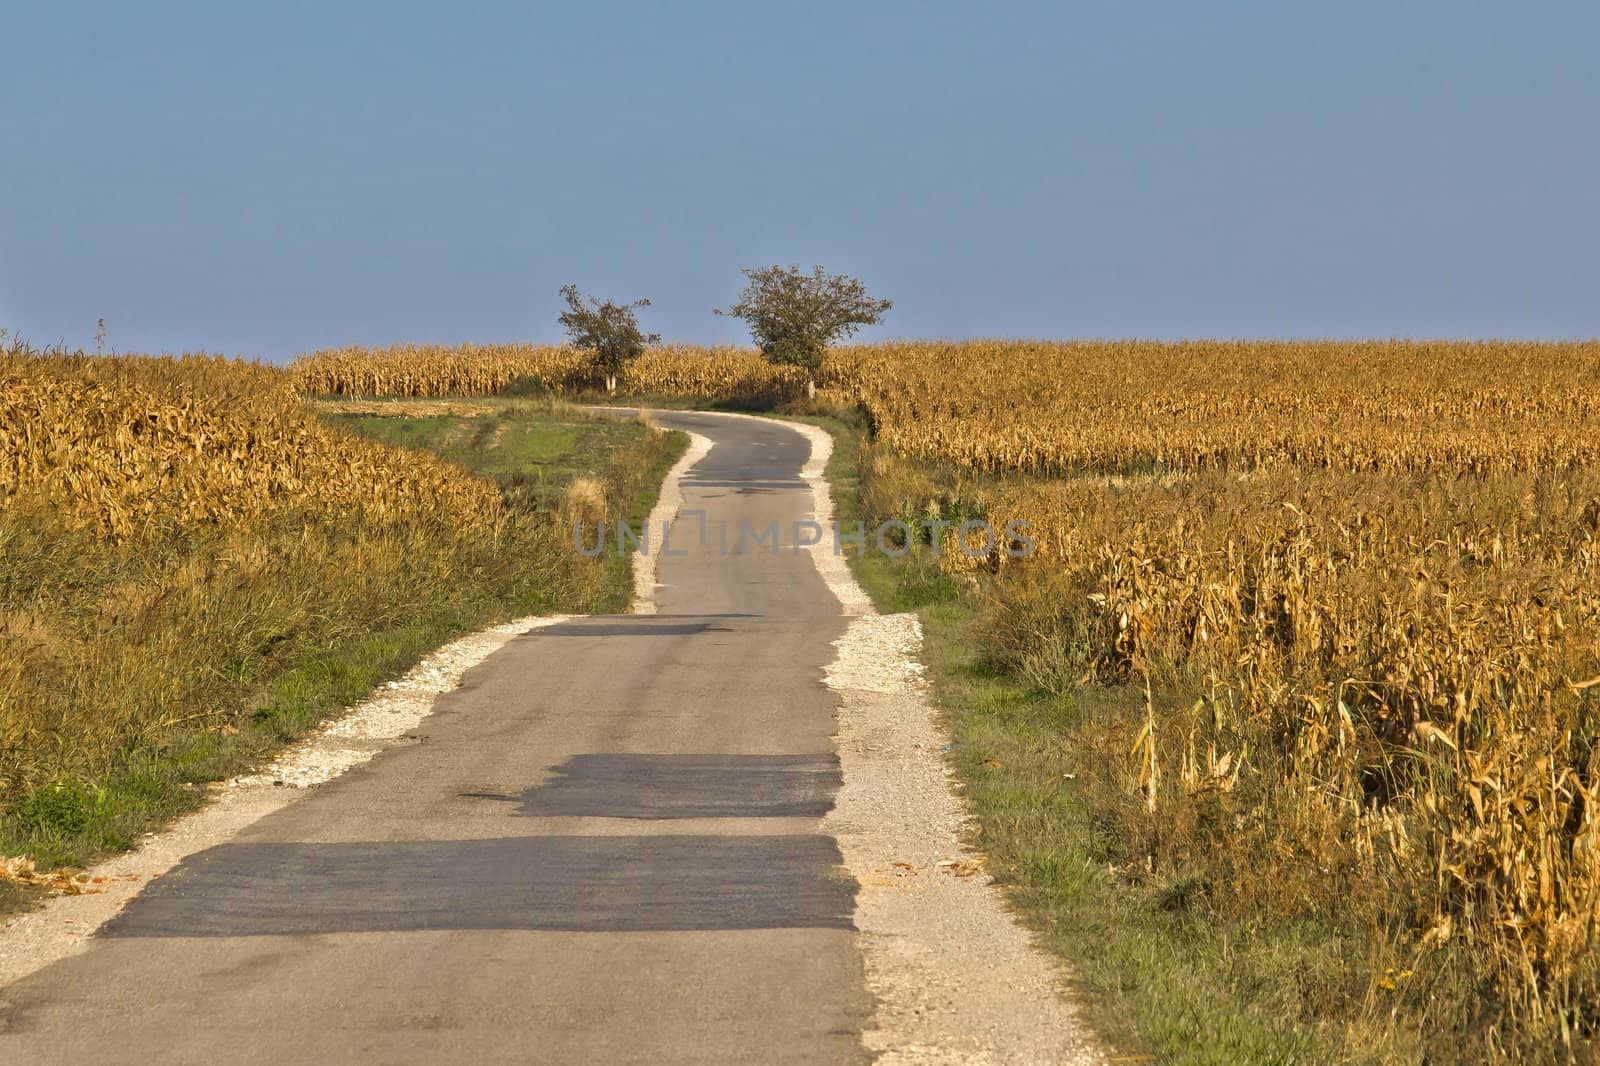 Beautiful countryside road through golden cornfields under blue sky